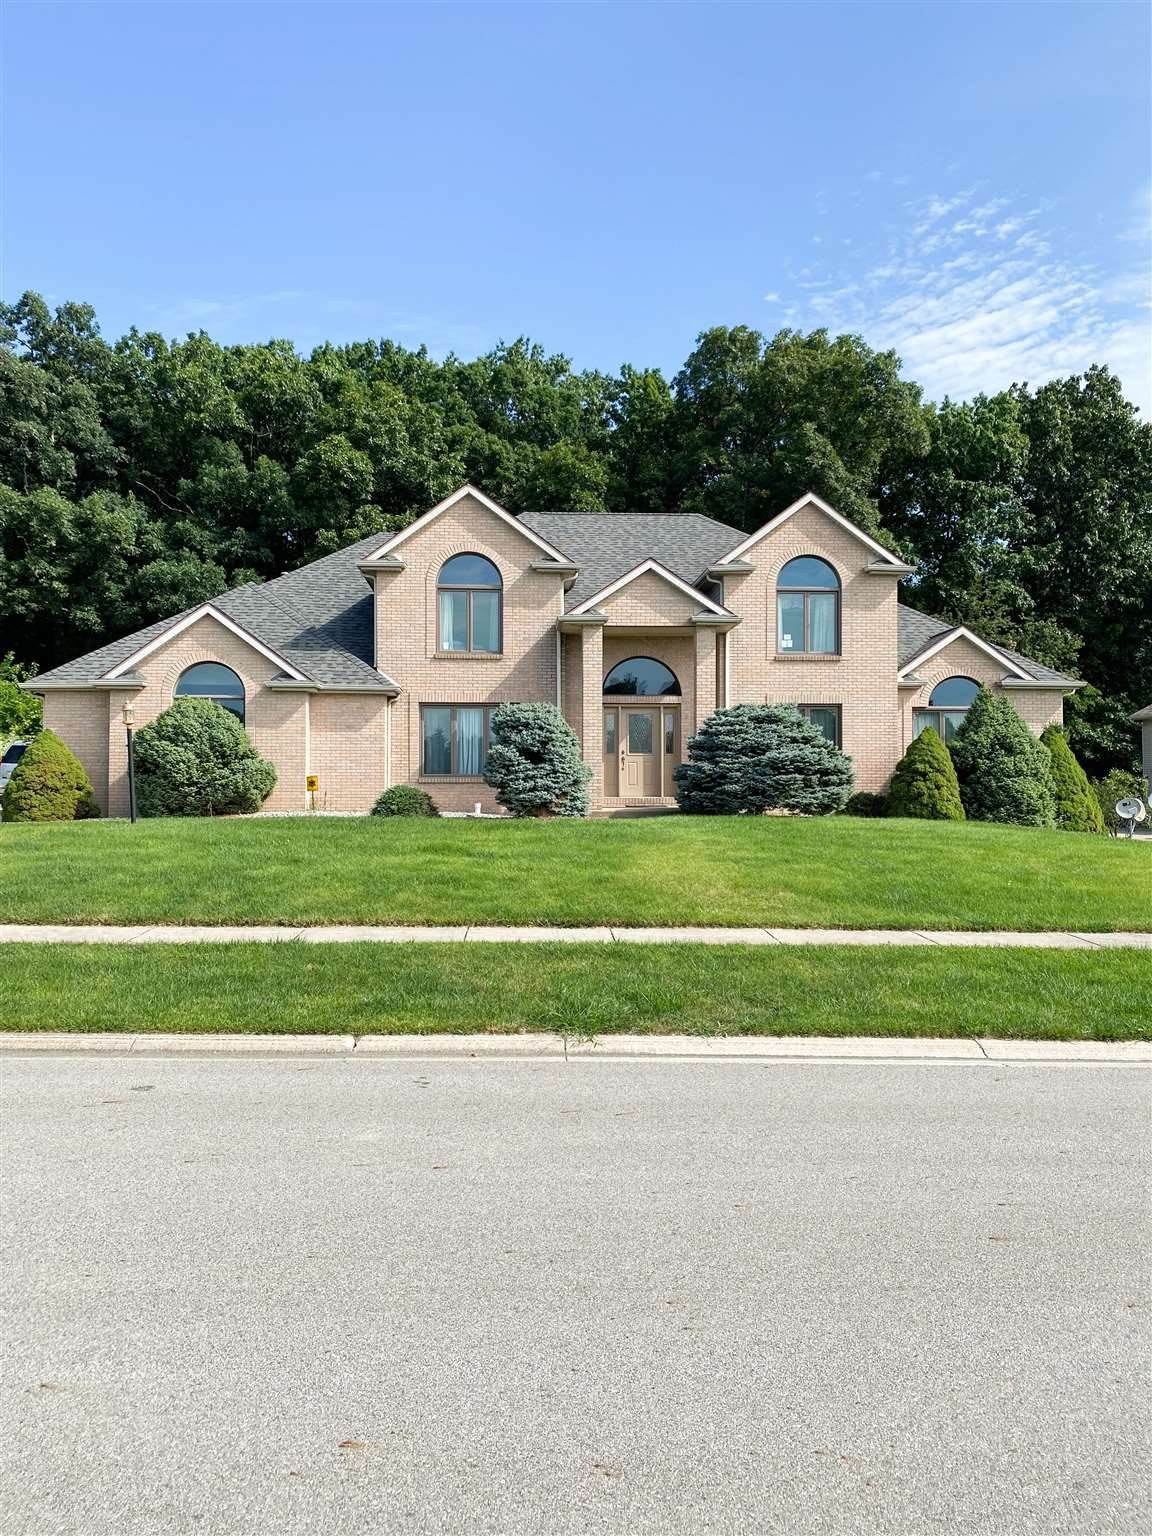 Single Family Homes for Sale at 760 Edgewood Lane Angola, Indiana 46703 United States